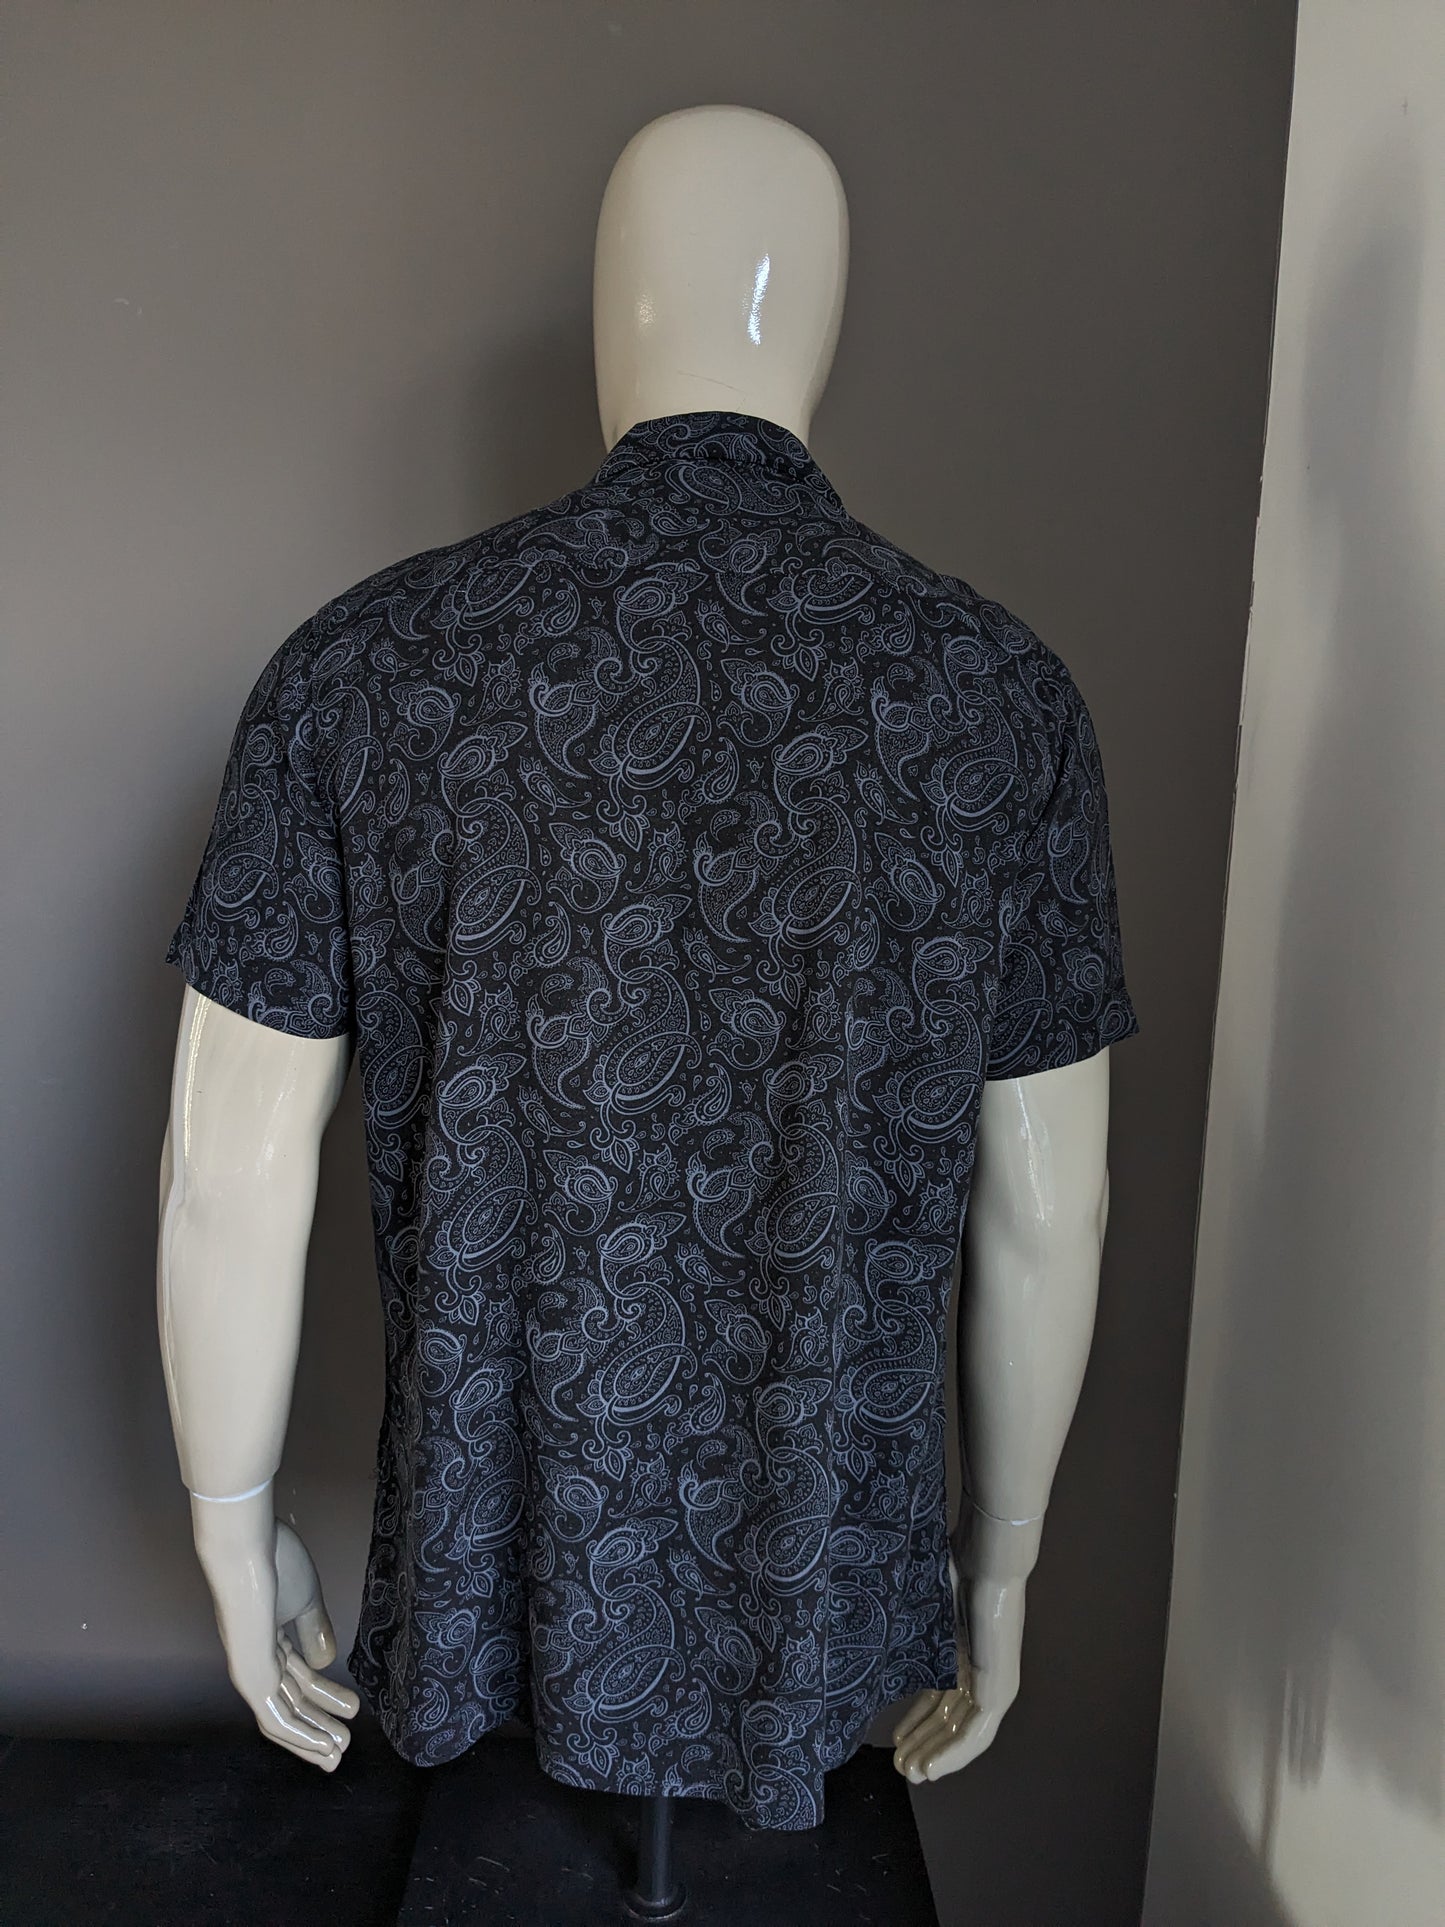 X-mail shirt short sleeve. Black gray paisley print. Size XL.